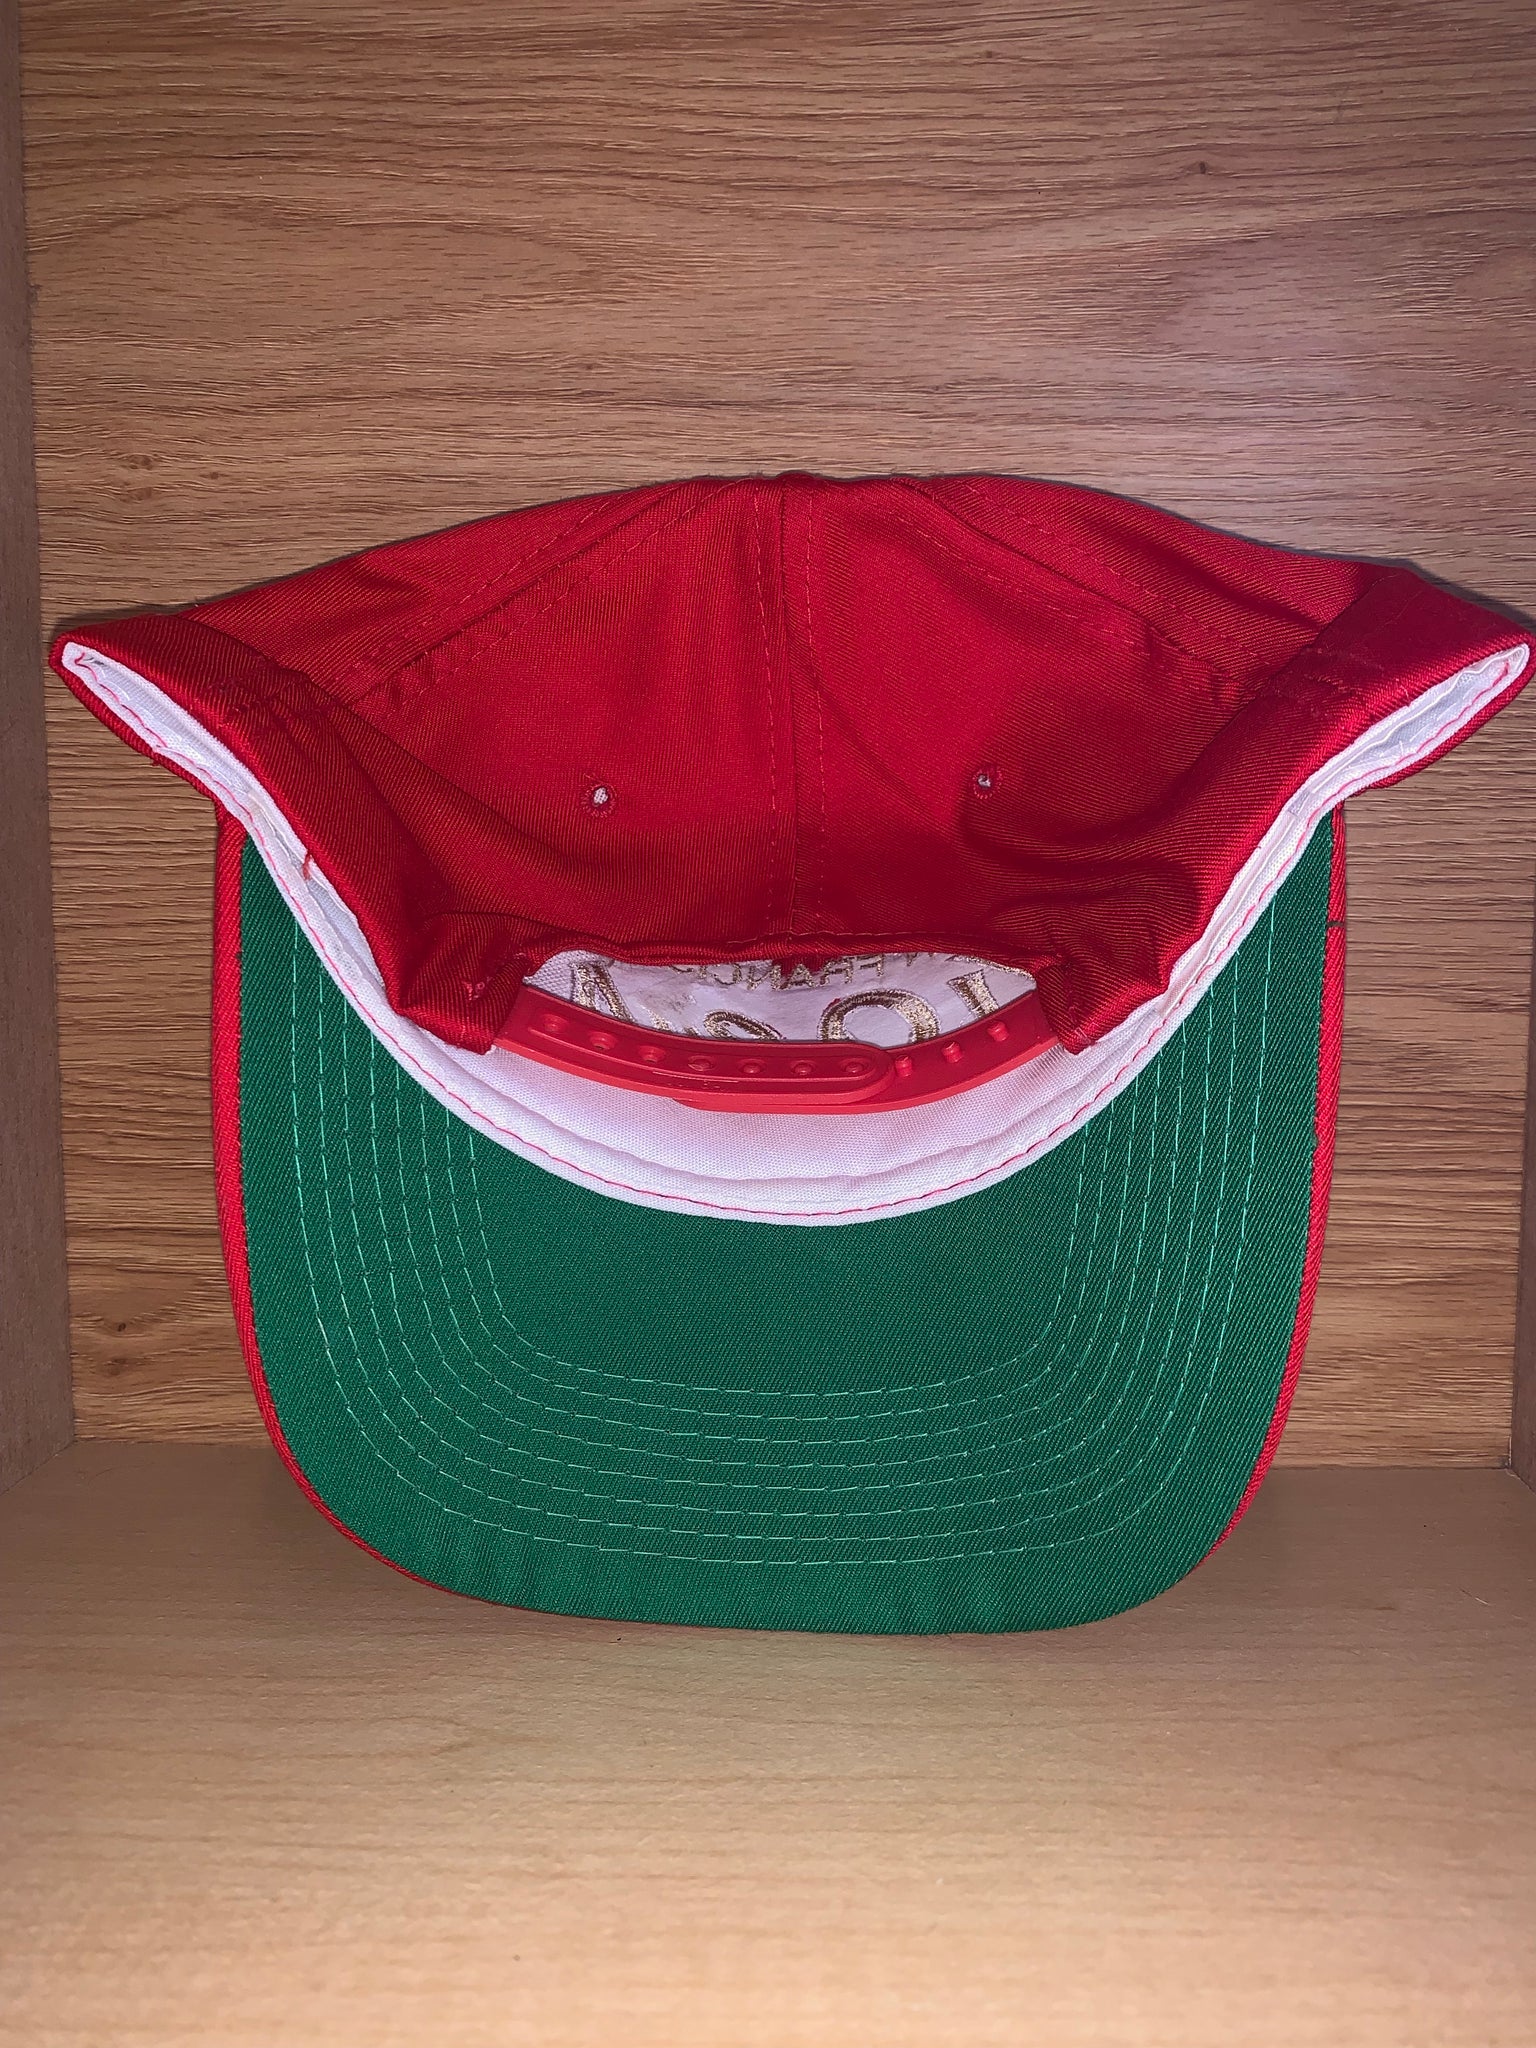 green 49ers hat